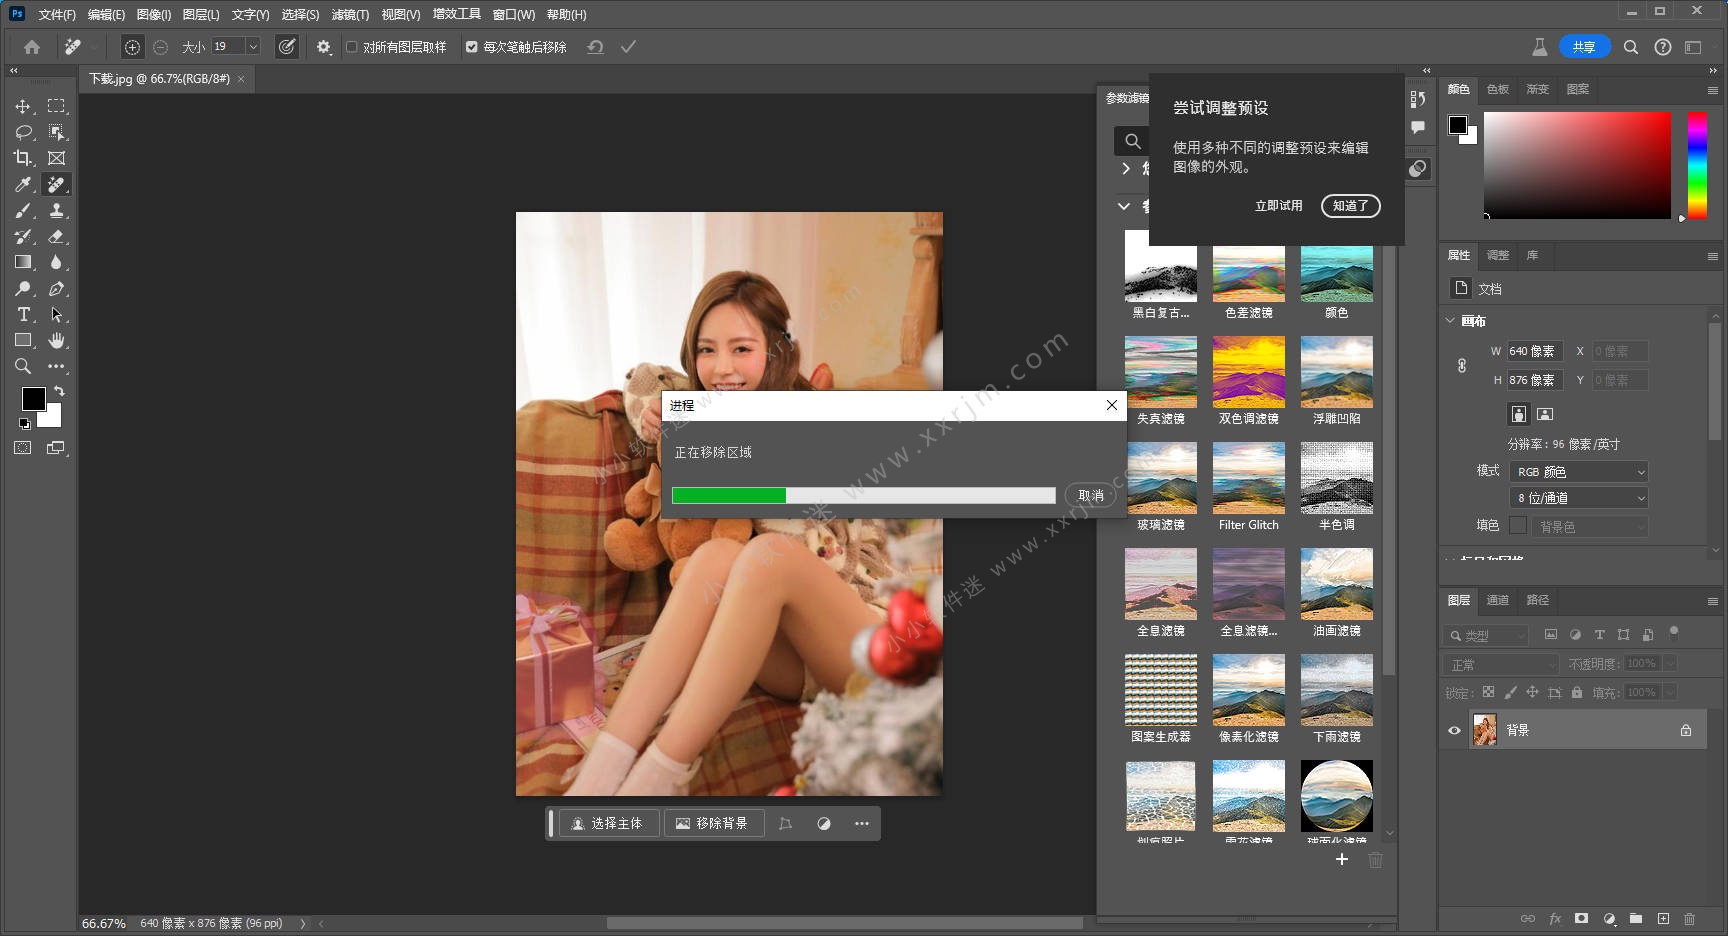 Photoshop 2024 v25.5.0.2475 beta 官方中文版下载使用教程